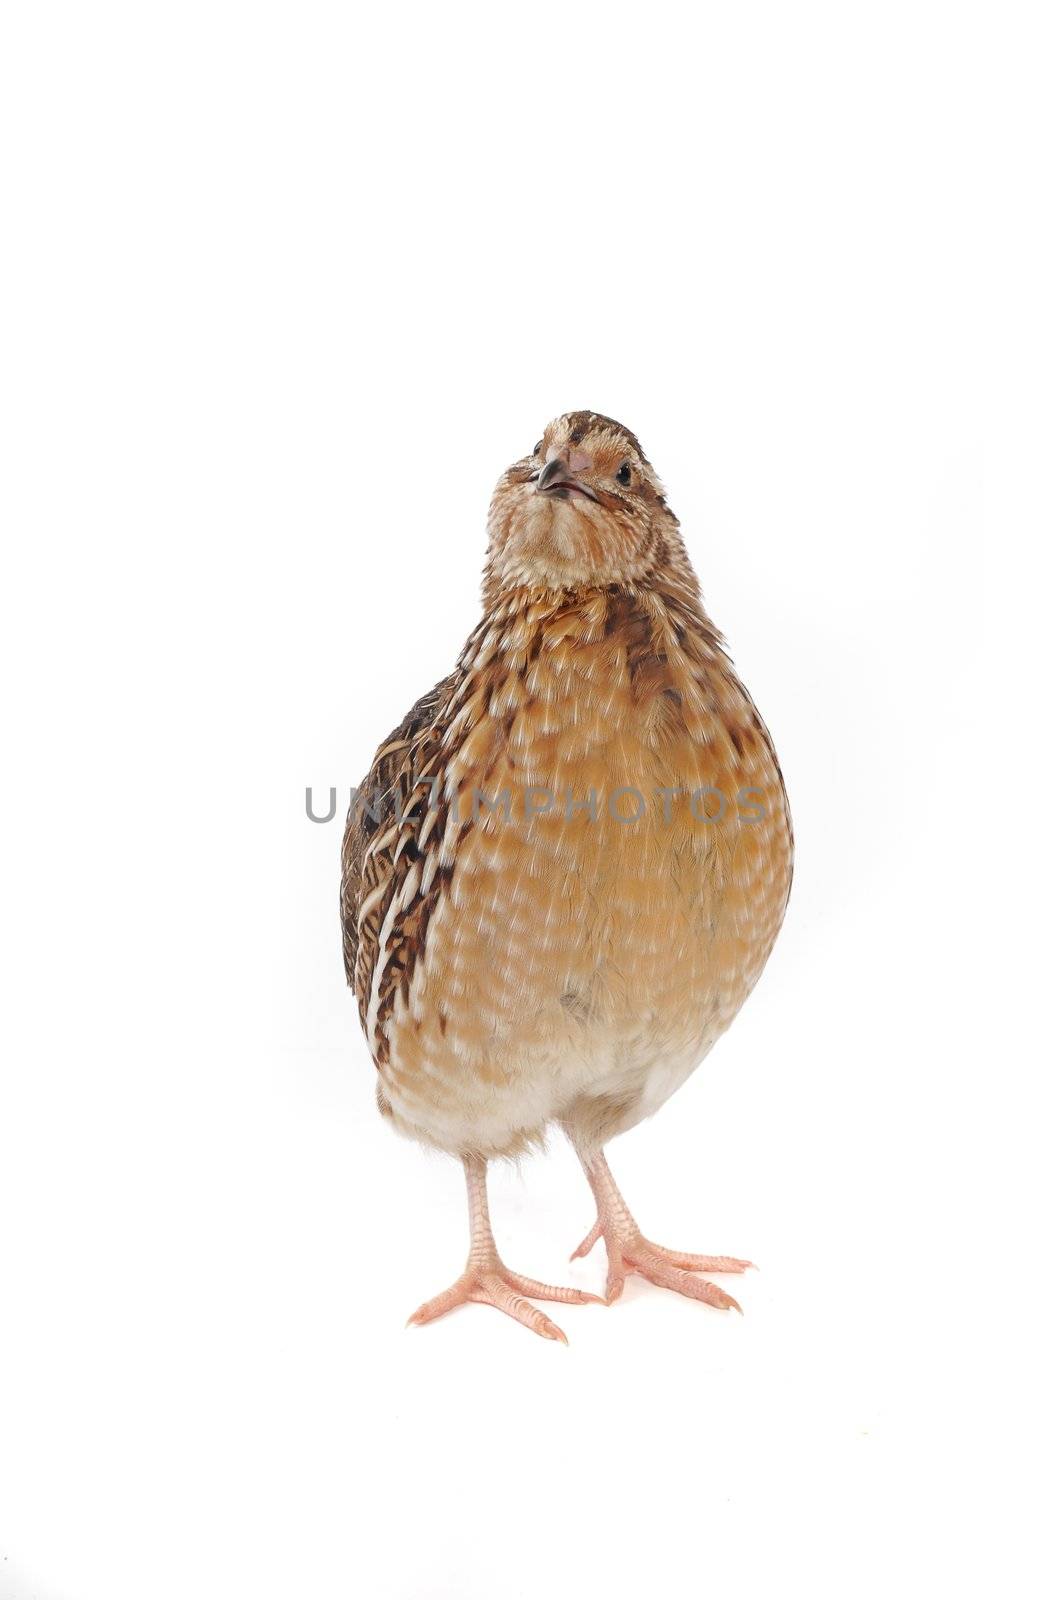 adult quail isolated on white background